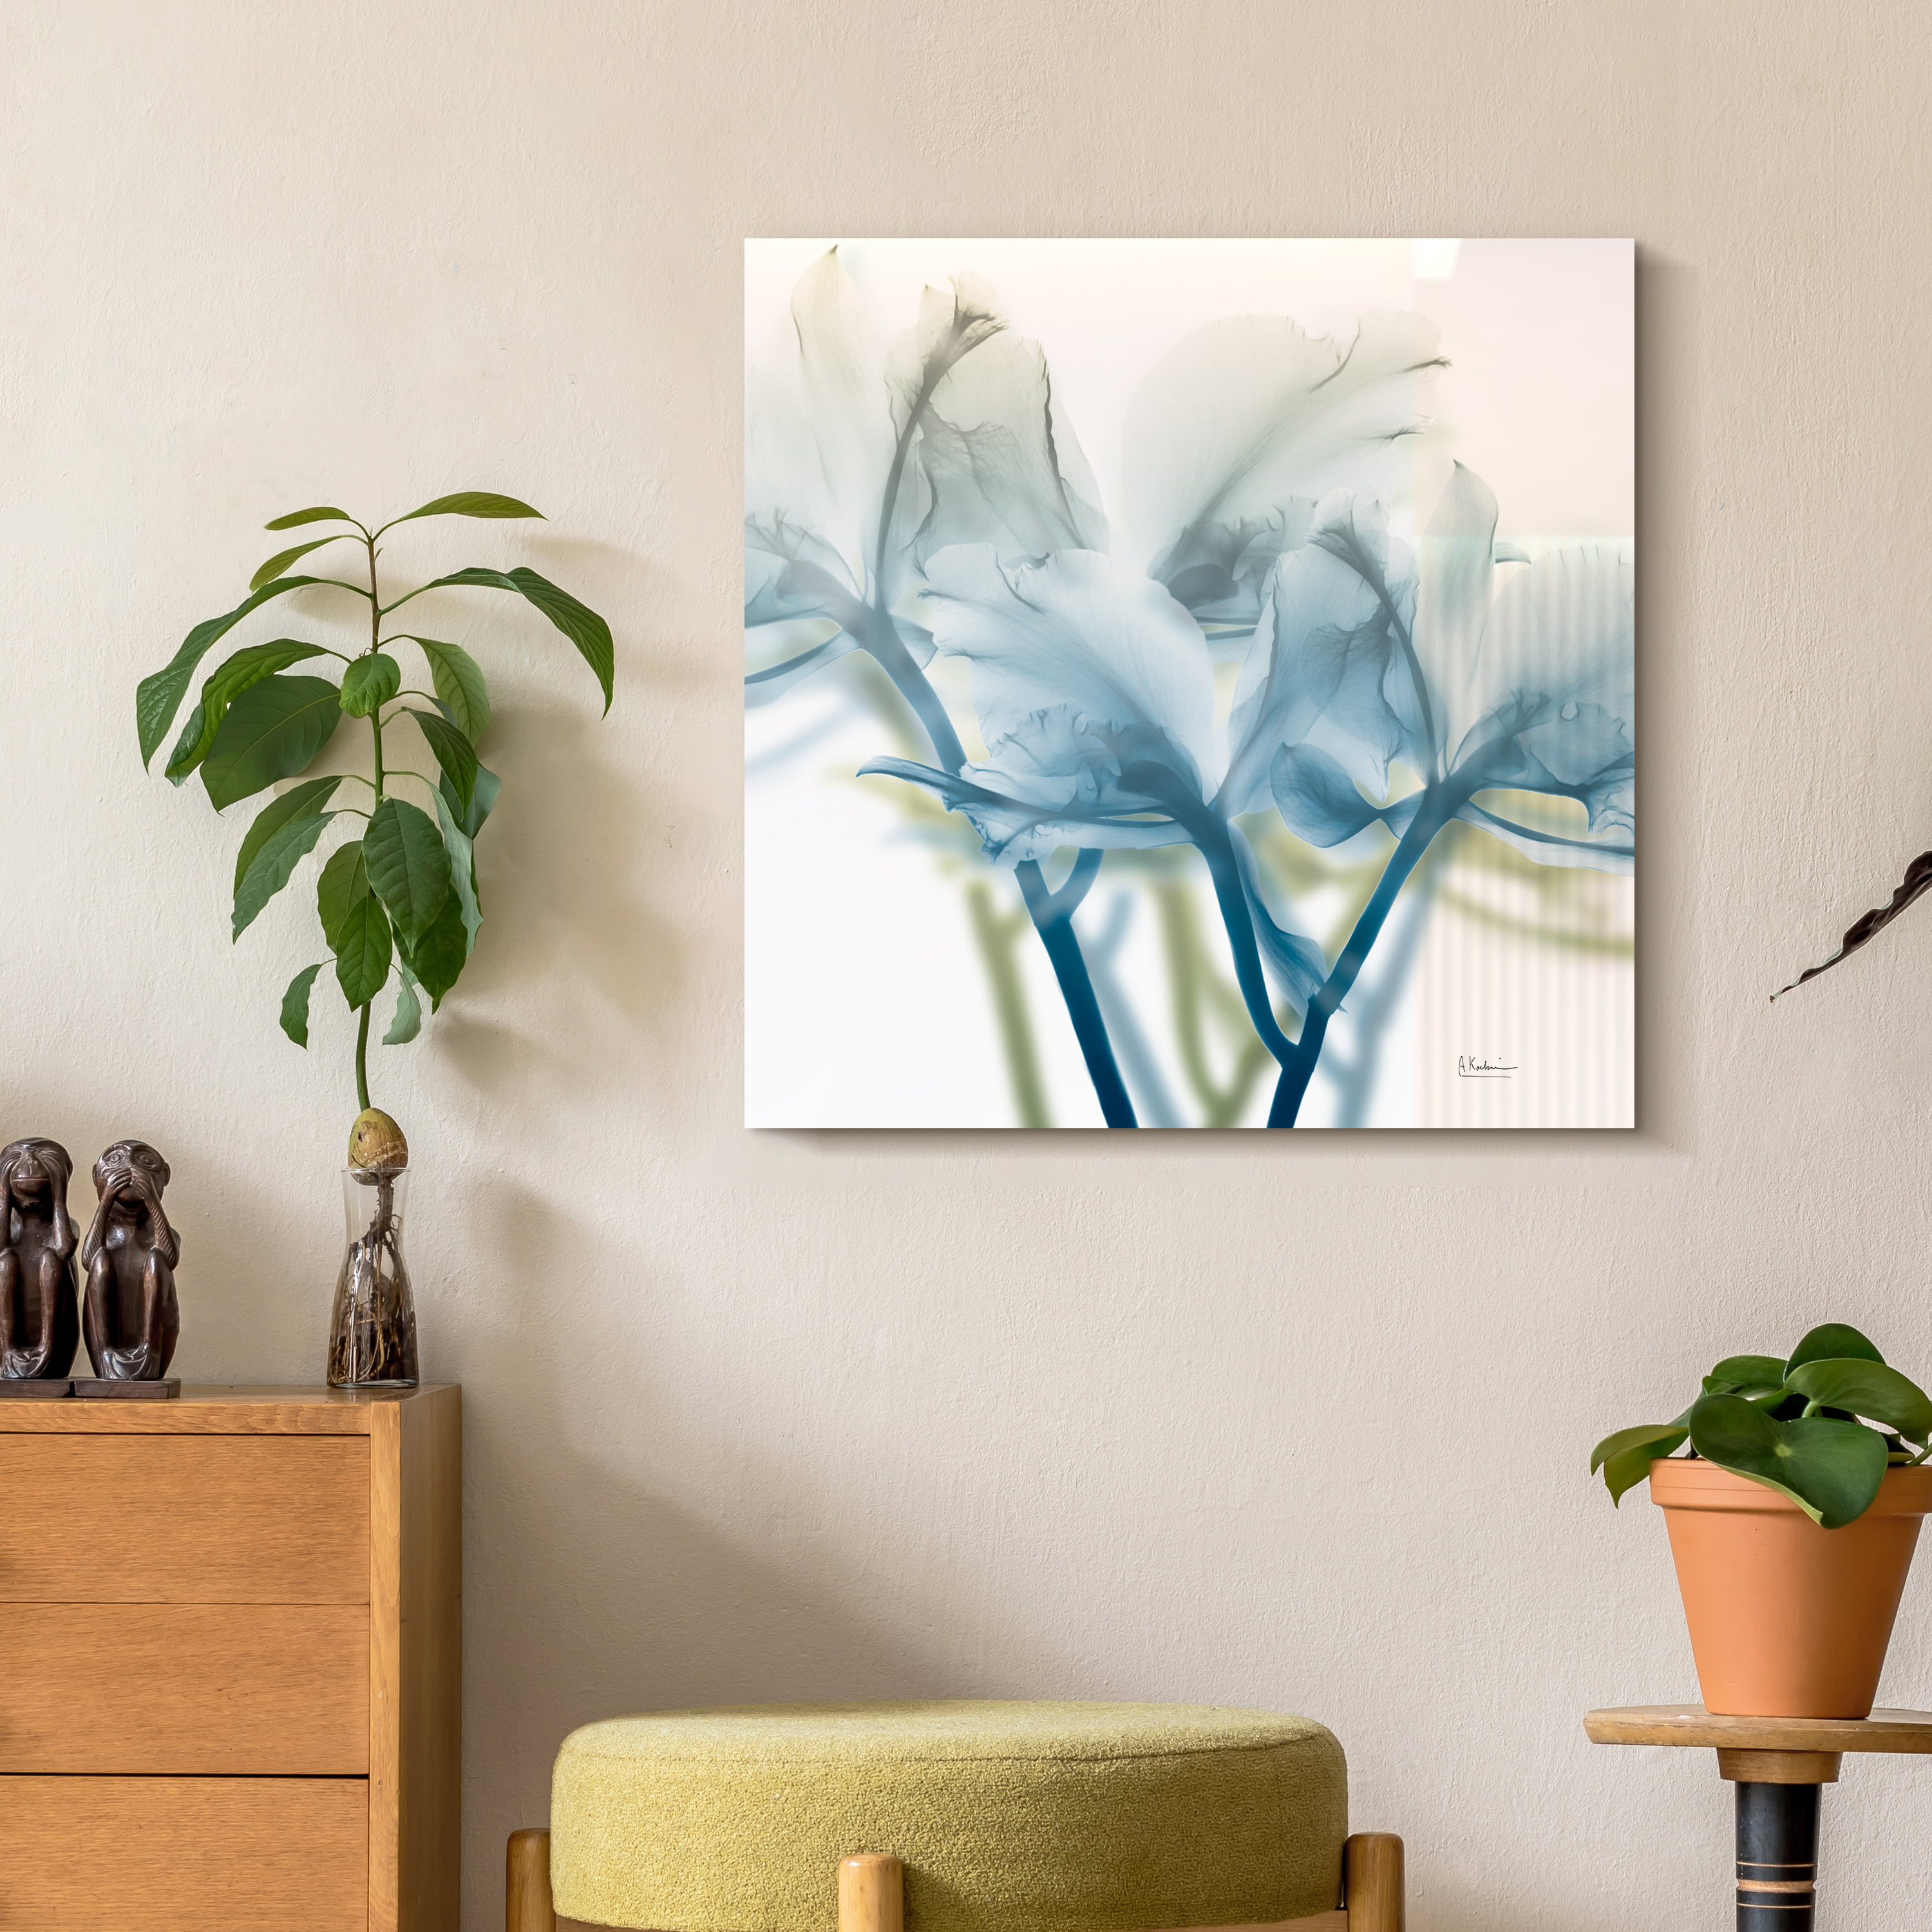 Empire Art Direct Unfocused Beauty 3 Frameless Free Floating Tempered Glass  Panel Graphic Flower Wall Art, 24